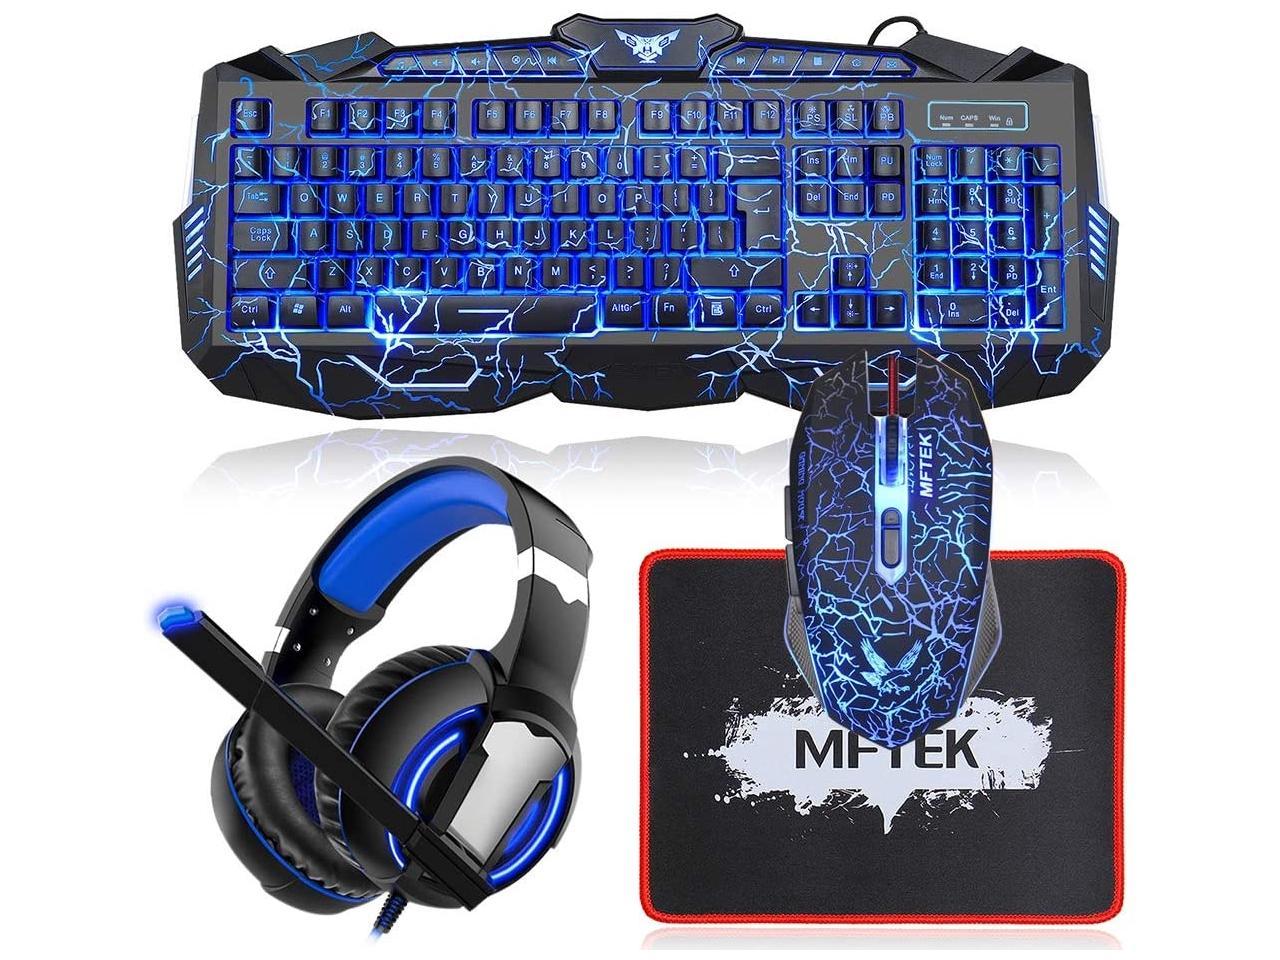 BlueFinger Gaming Keyboard Mouse Headset Combo,USB Wired 3 Color Crack Backlit Keyboard,Blue LED Light Gaming Headset,Gaming Keyboard Set for Computer PC Game Office Work 